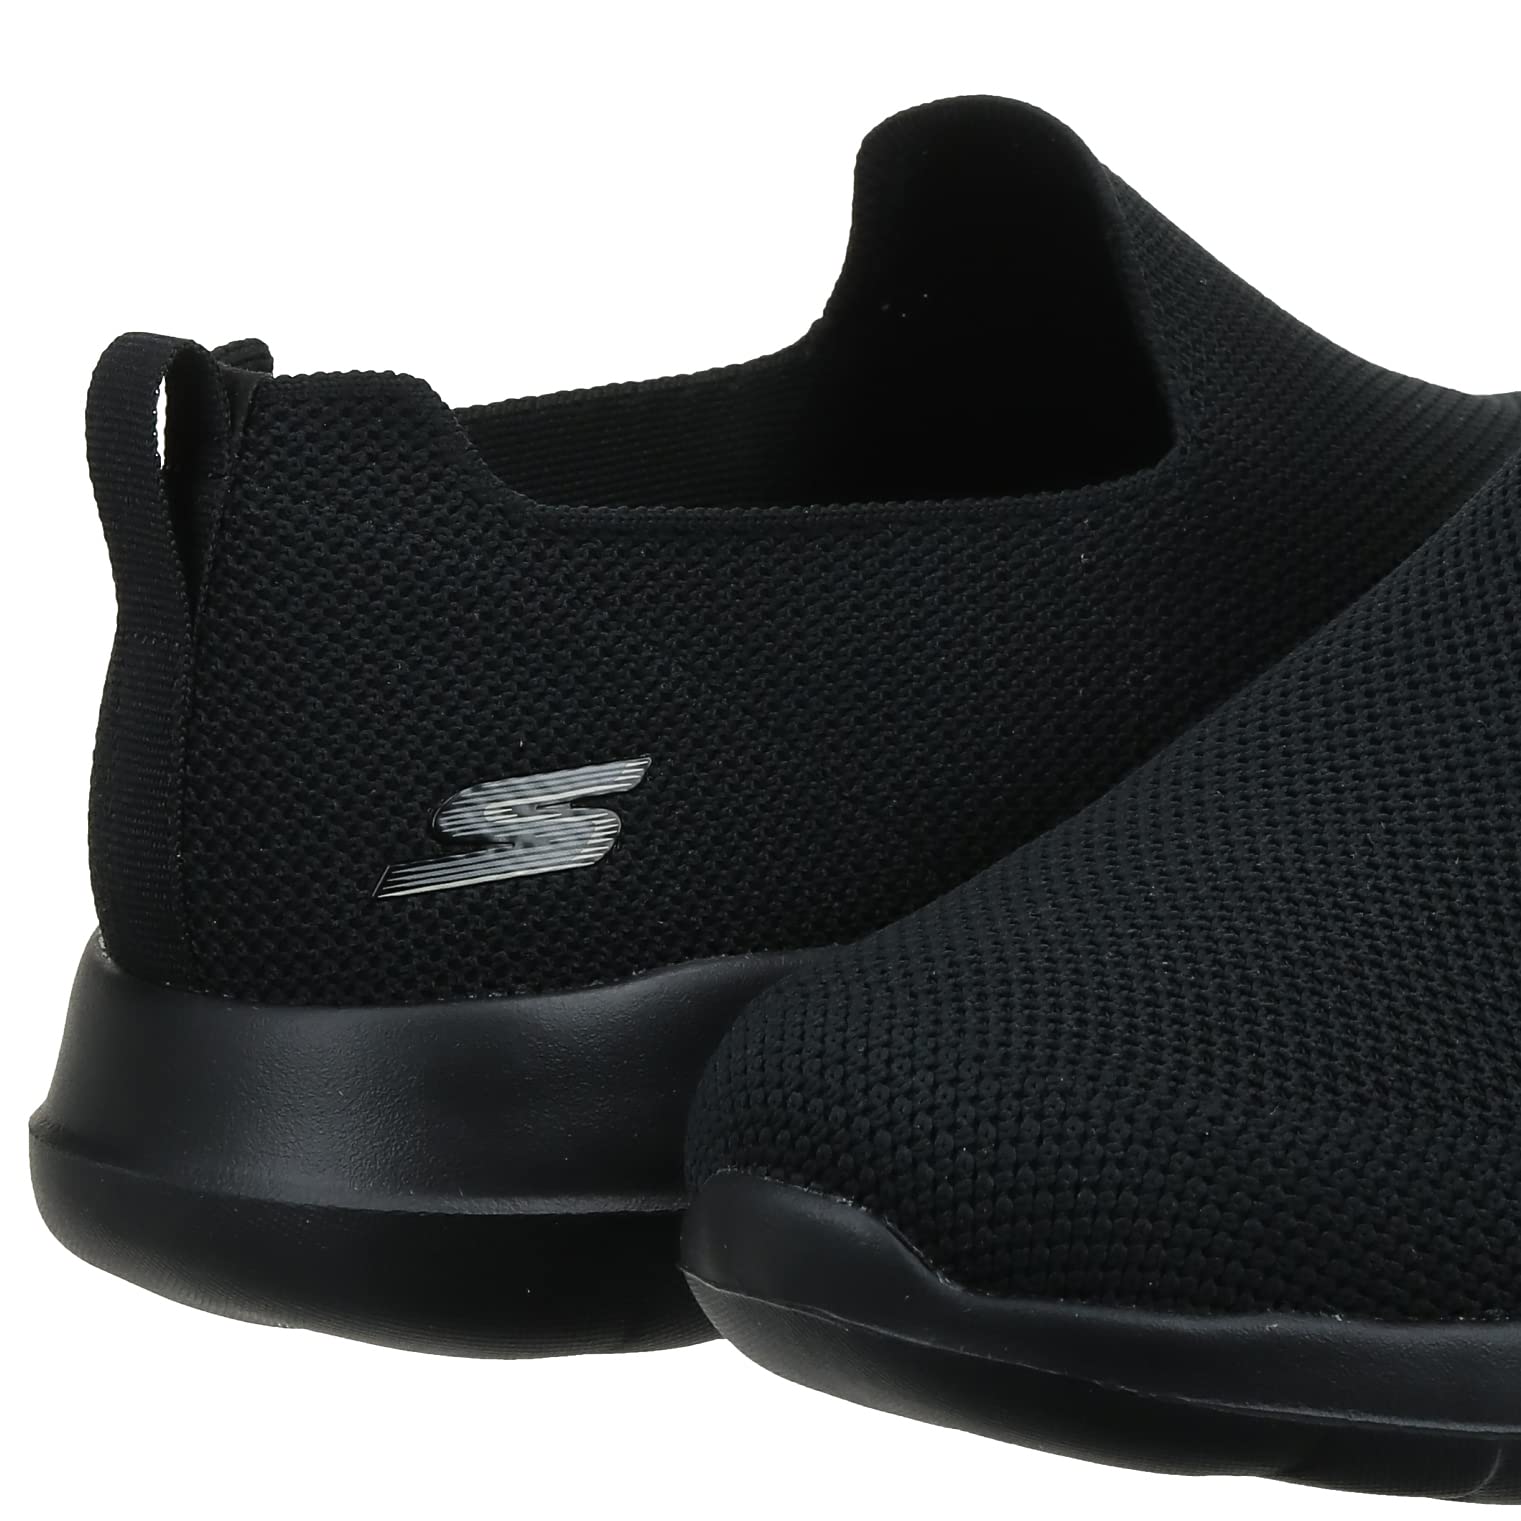 Skechers Men's Go Walk Max-Athletic Air Mesh Slip on Walkking Shoe Sneaker,Black/Black/Black,10.5 M US